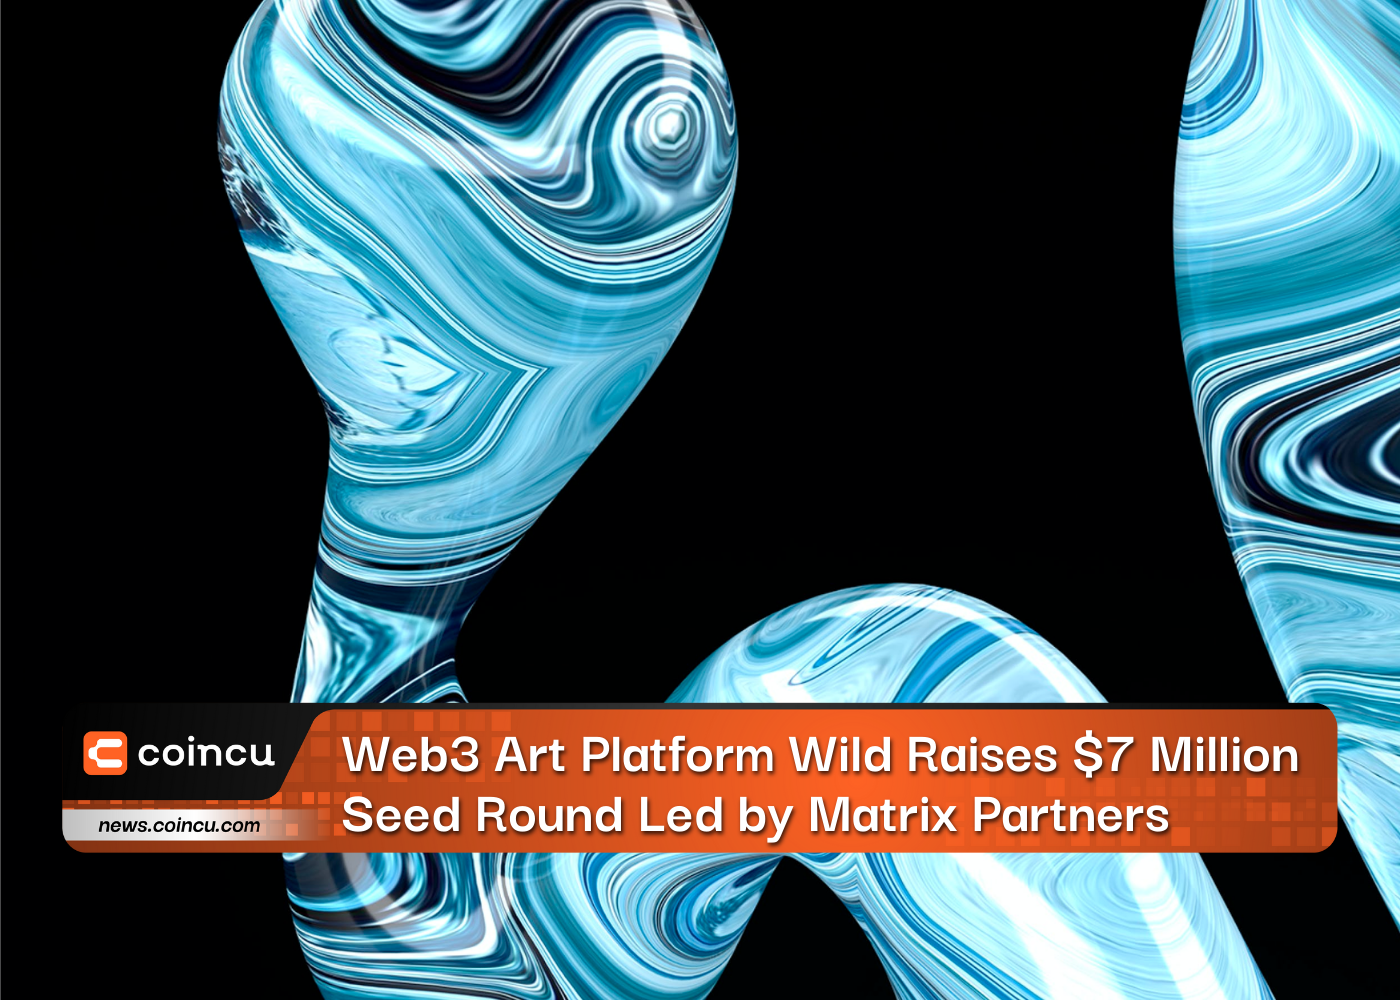 Web3 Art Platform Wild Raises $7 Million Seed Round Led by Matrix Partners